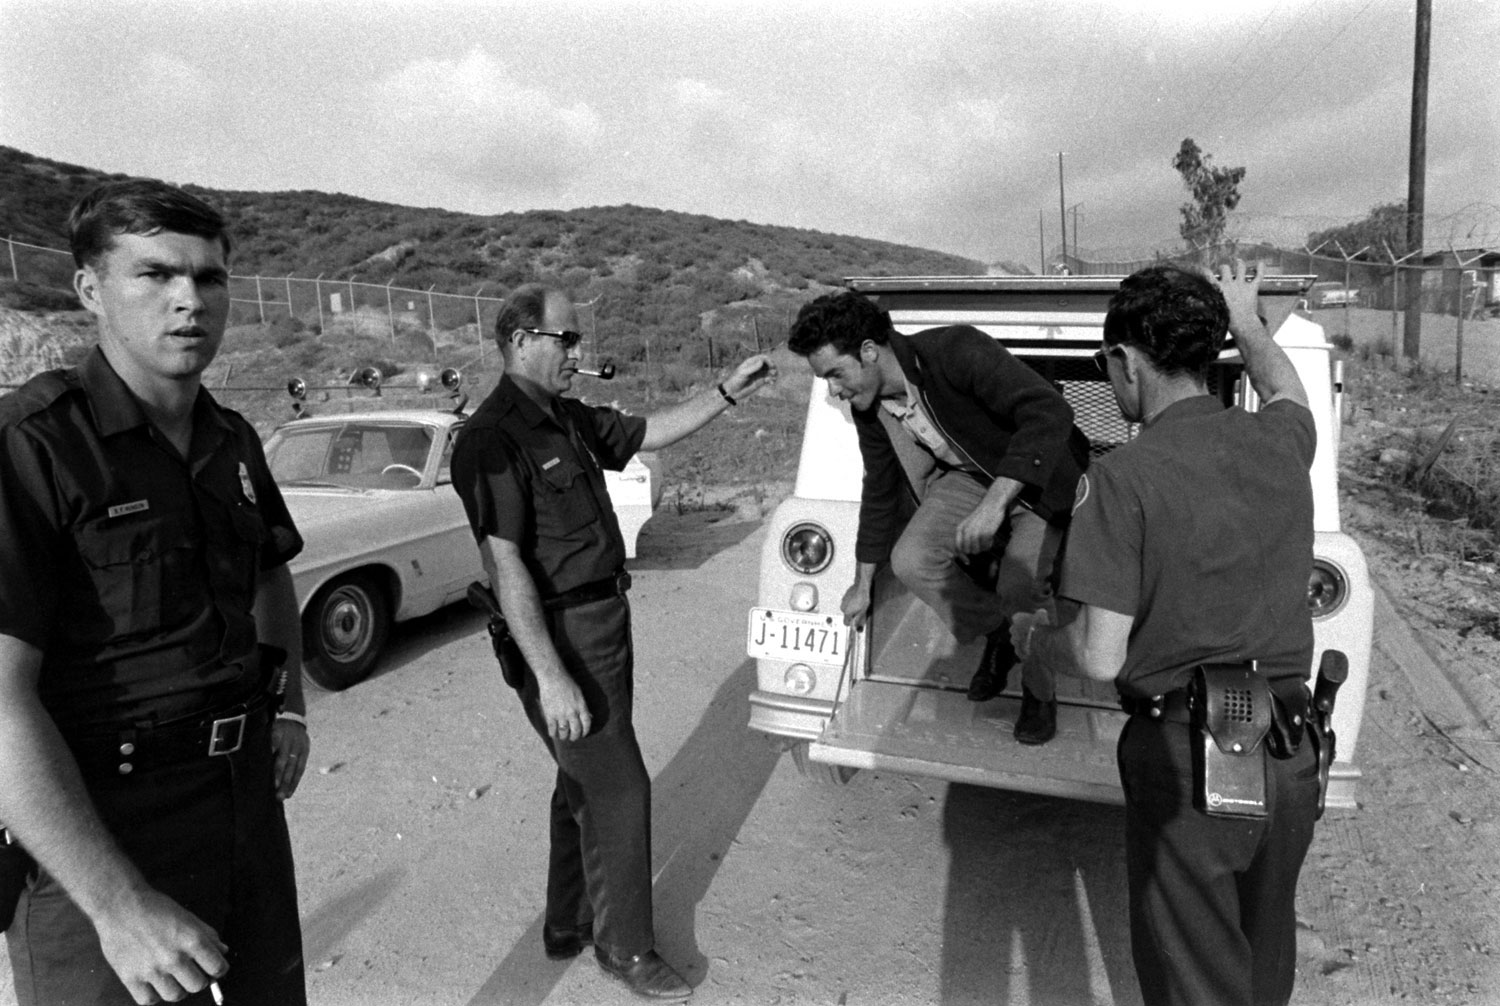 Scene from U.S. Customs' anti-drug smuggling effort, "Operation Intercept," along the U.S.-Mexico border, 1969.